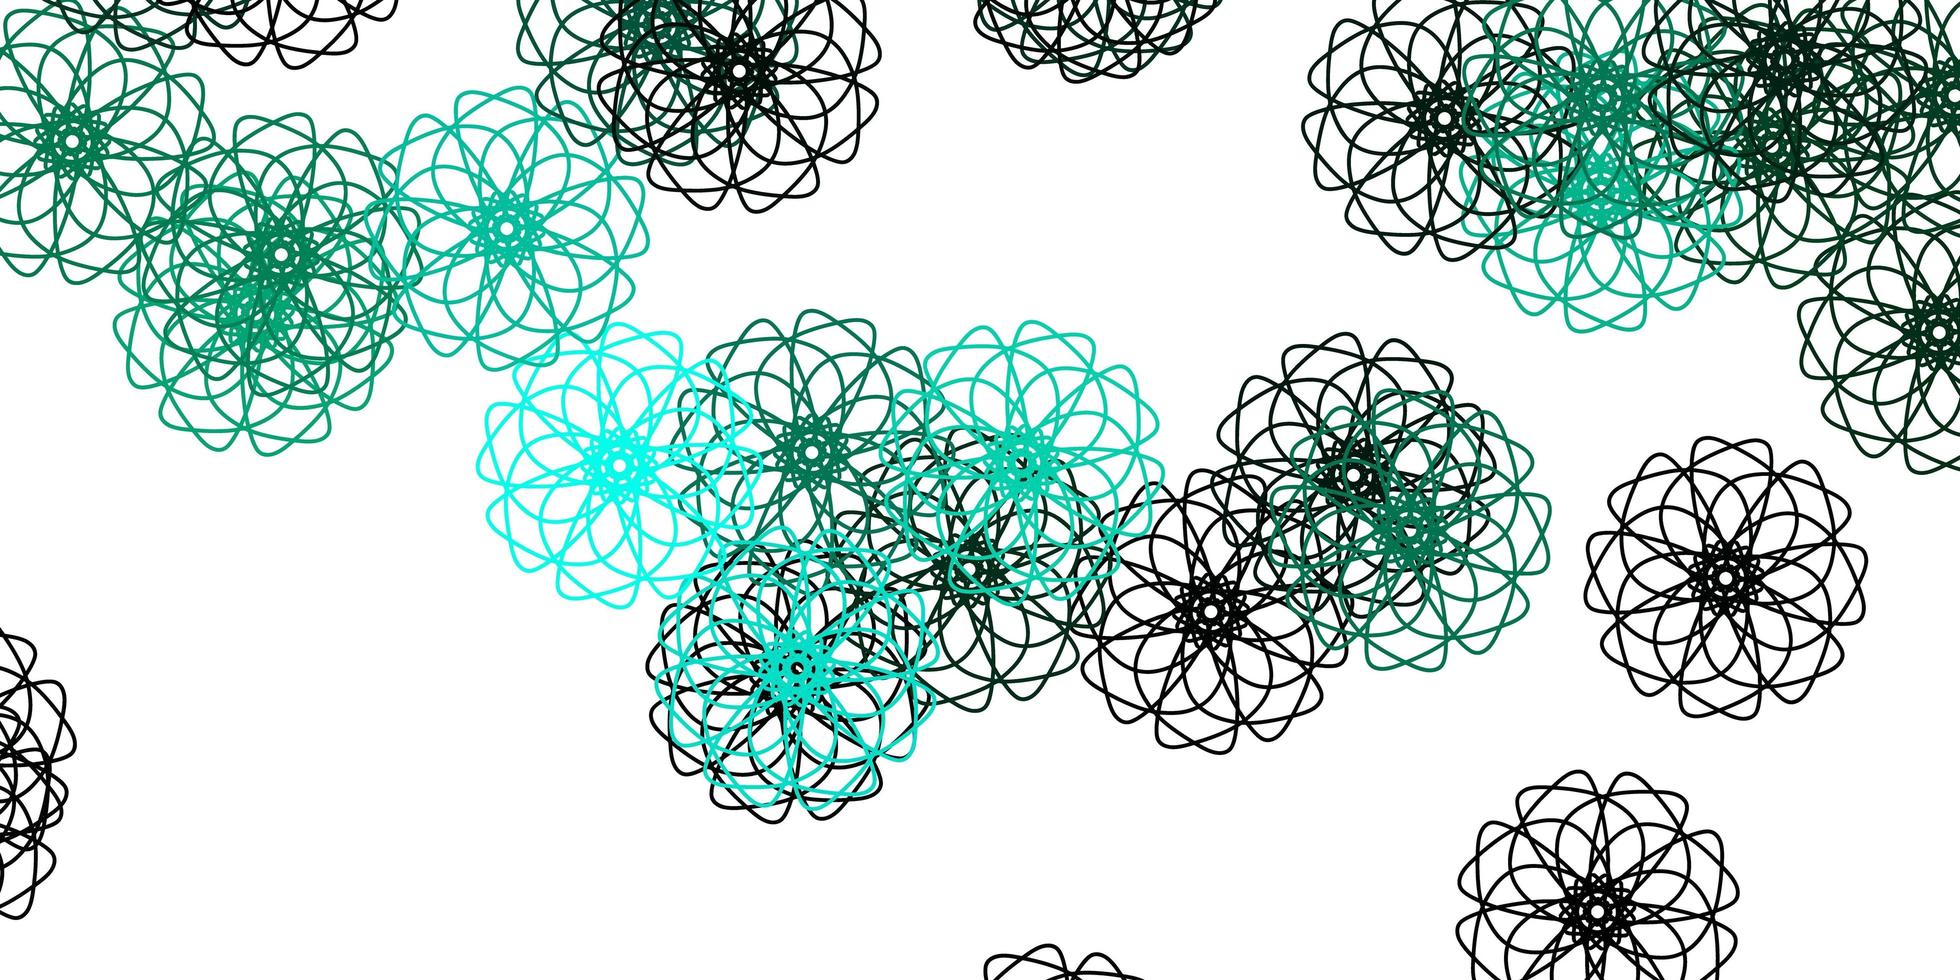 ljusgrön vektor doodle bakgrund med blommor.